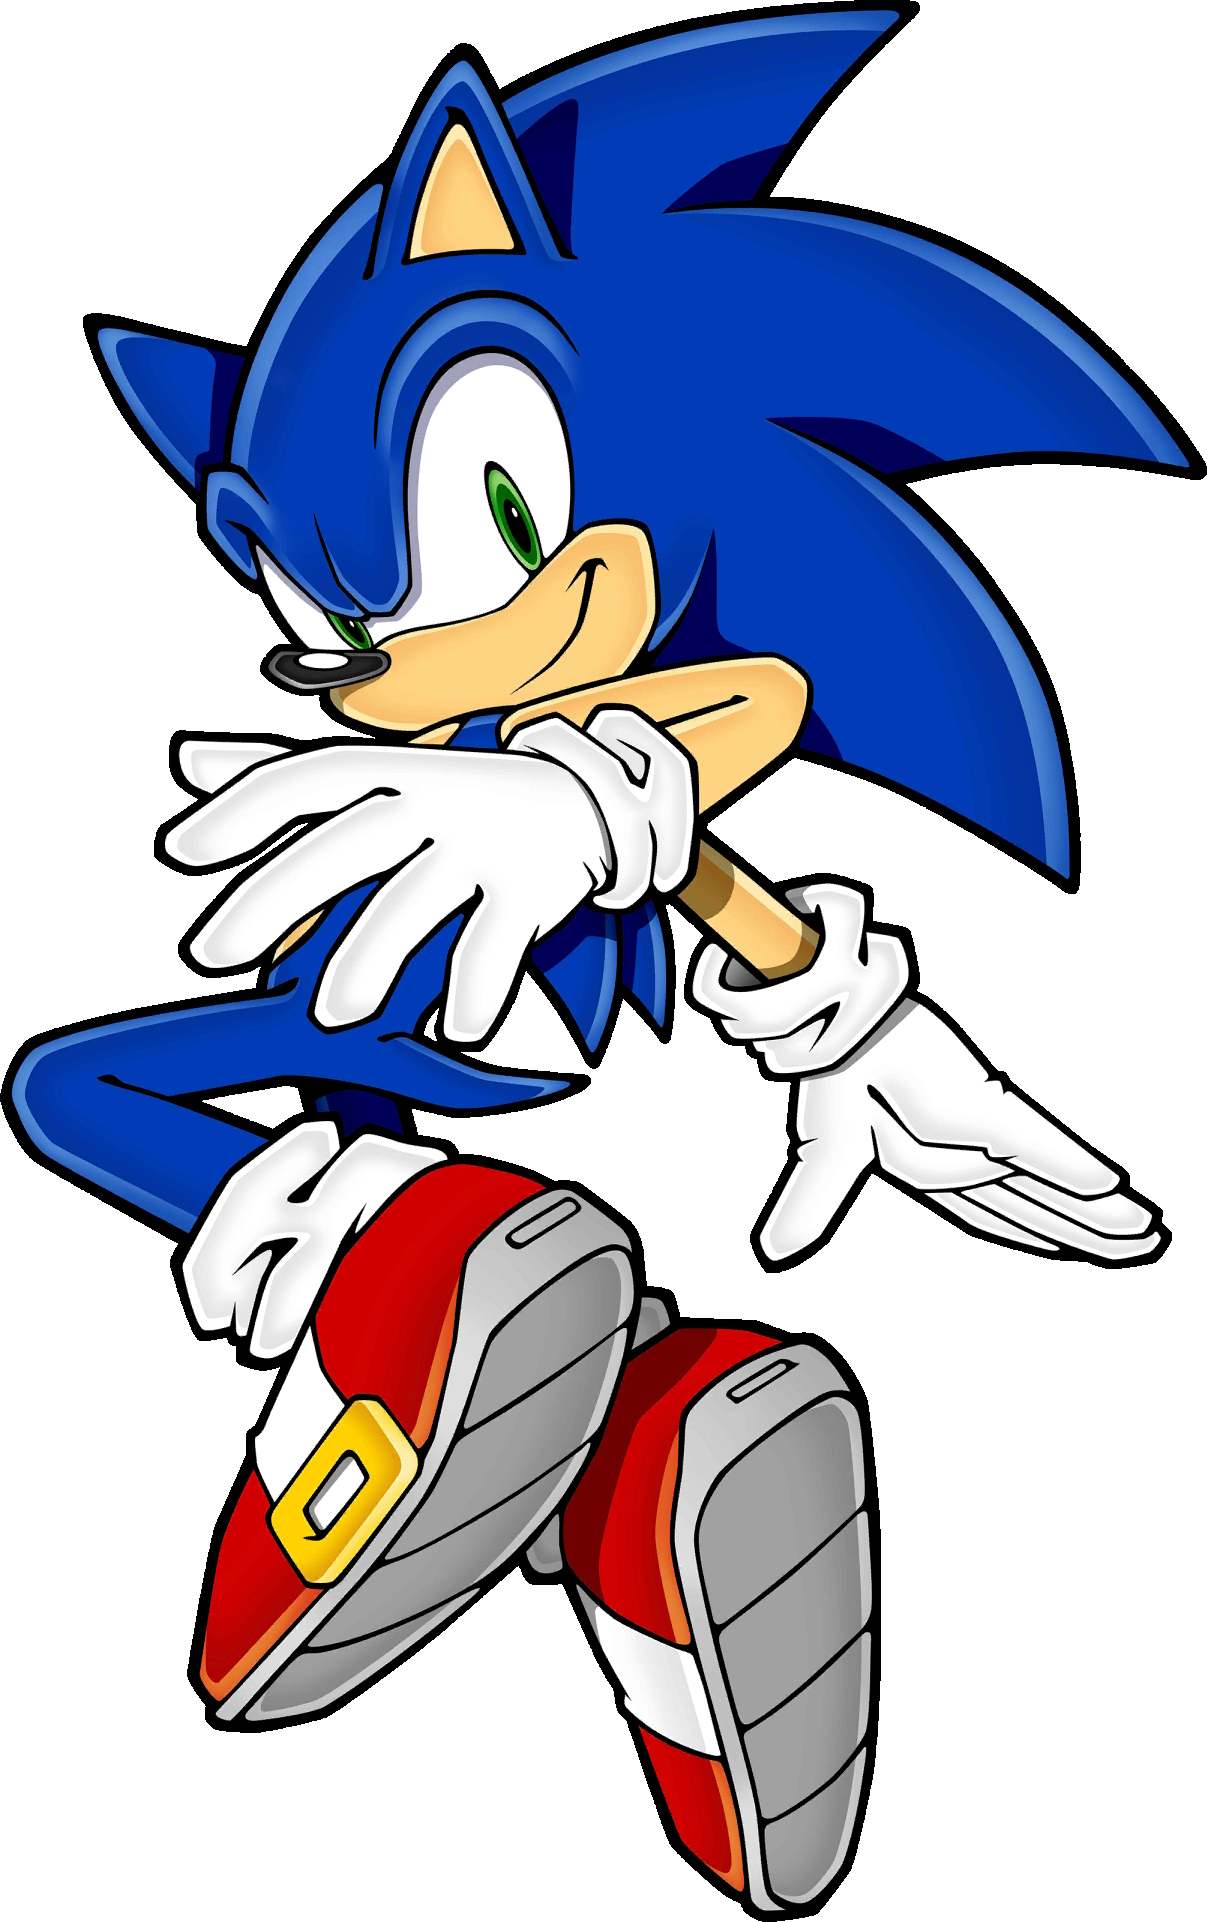 Sonic the Hedgehog | Megami Tensei Wiki | Fandom